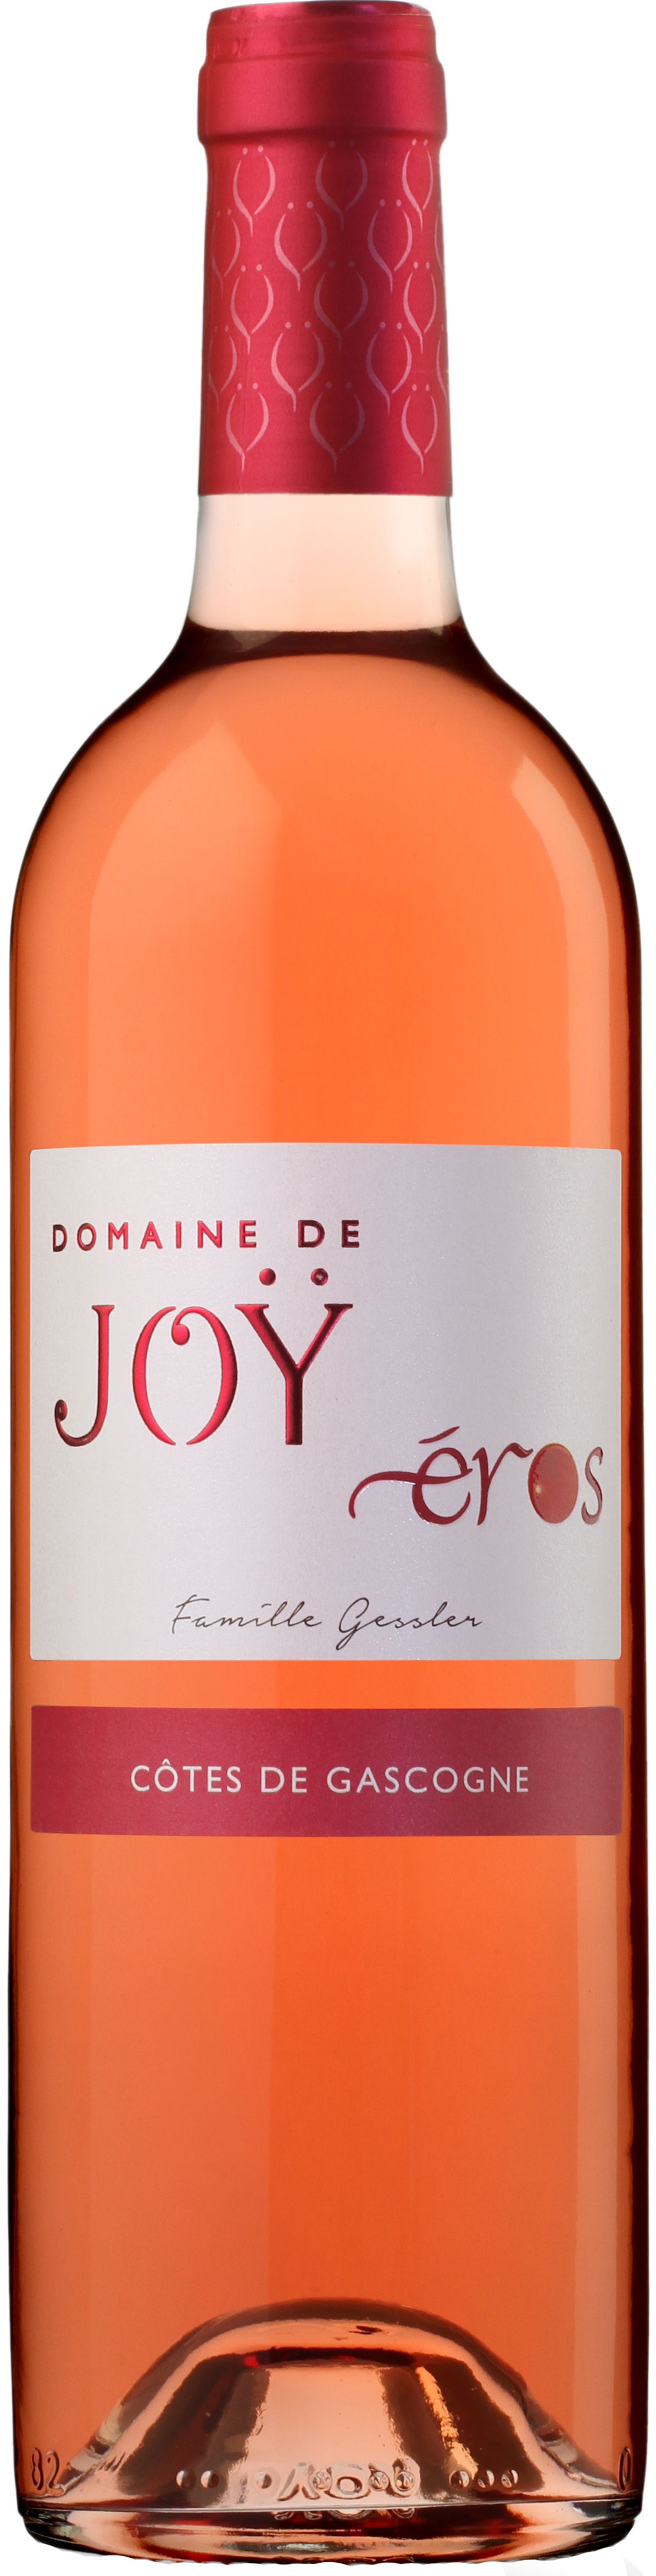 Domaine De Joy, Eros, 2015